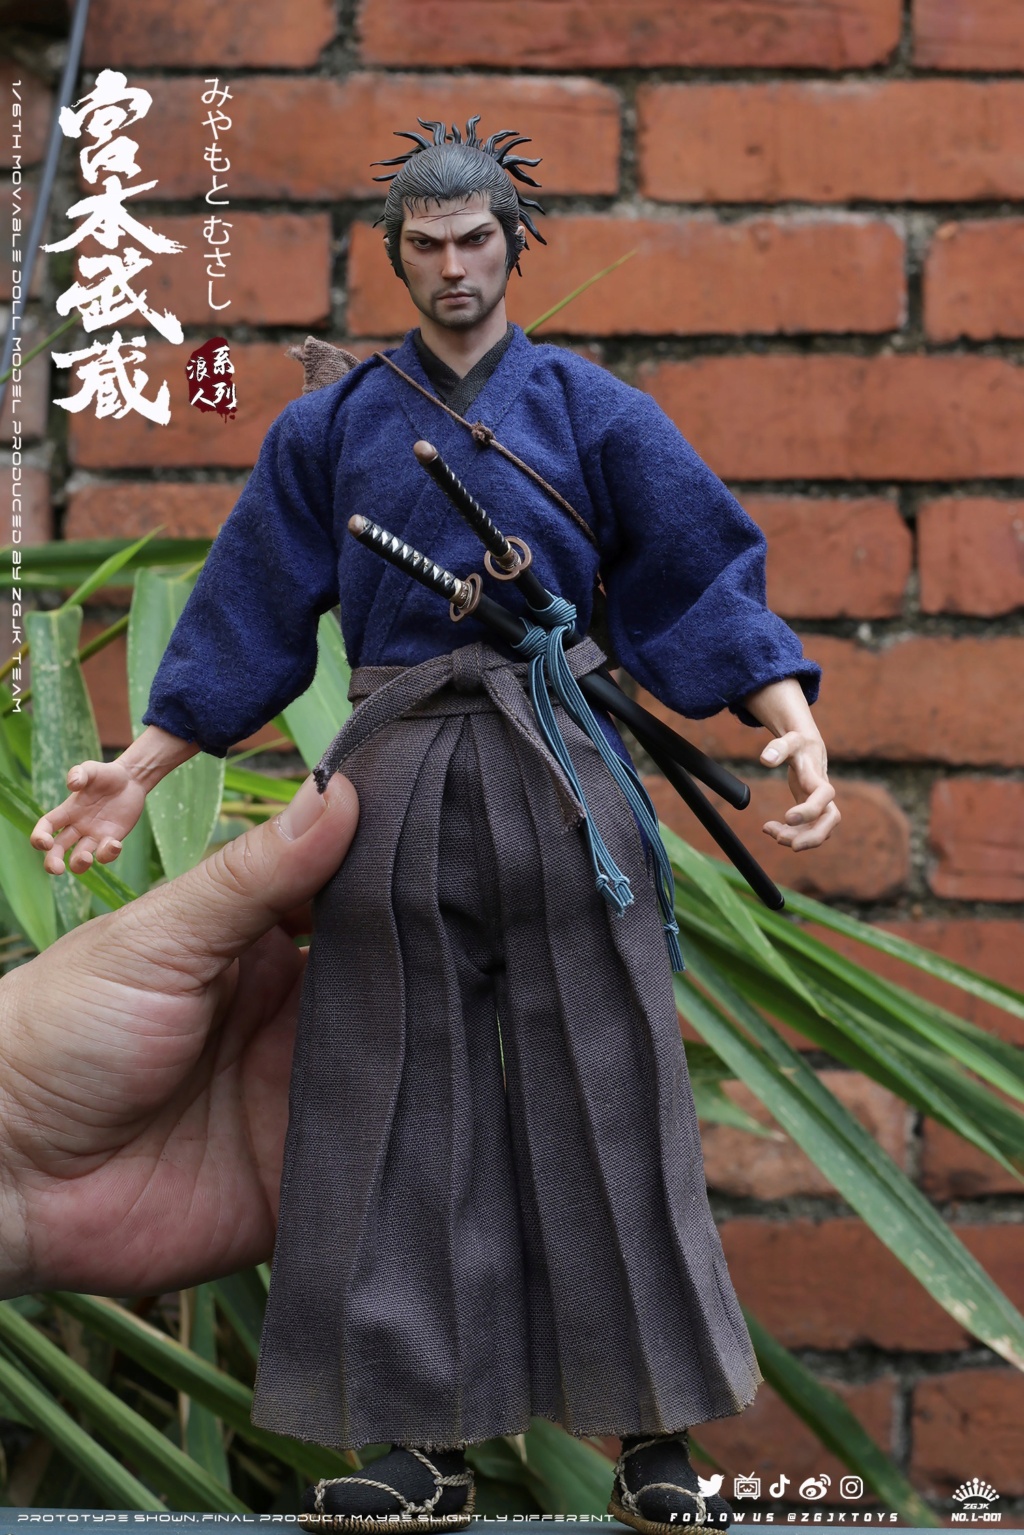 Anime - MEW PRODUCT: ZGJKTOYS: Ronin Series 1/6 Miyamoto Musashi Action Figure ------ Updated Official Figure 8678eb10